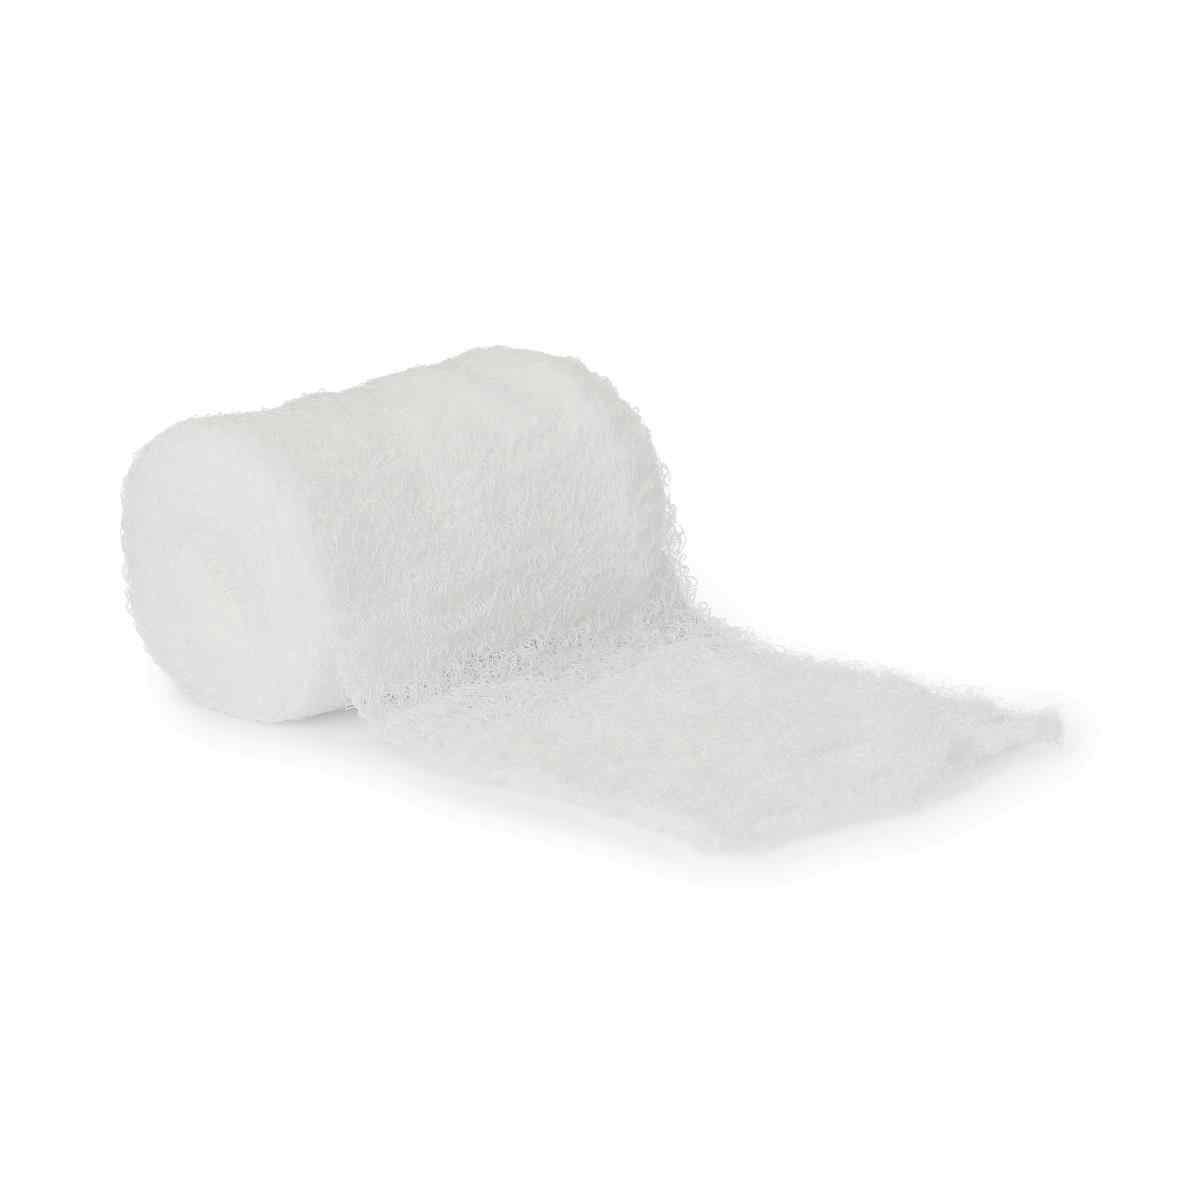 Medline Non-Sterile Cotton Gauze Bandage Rolls